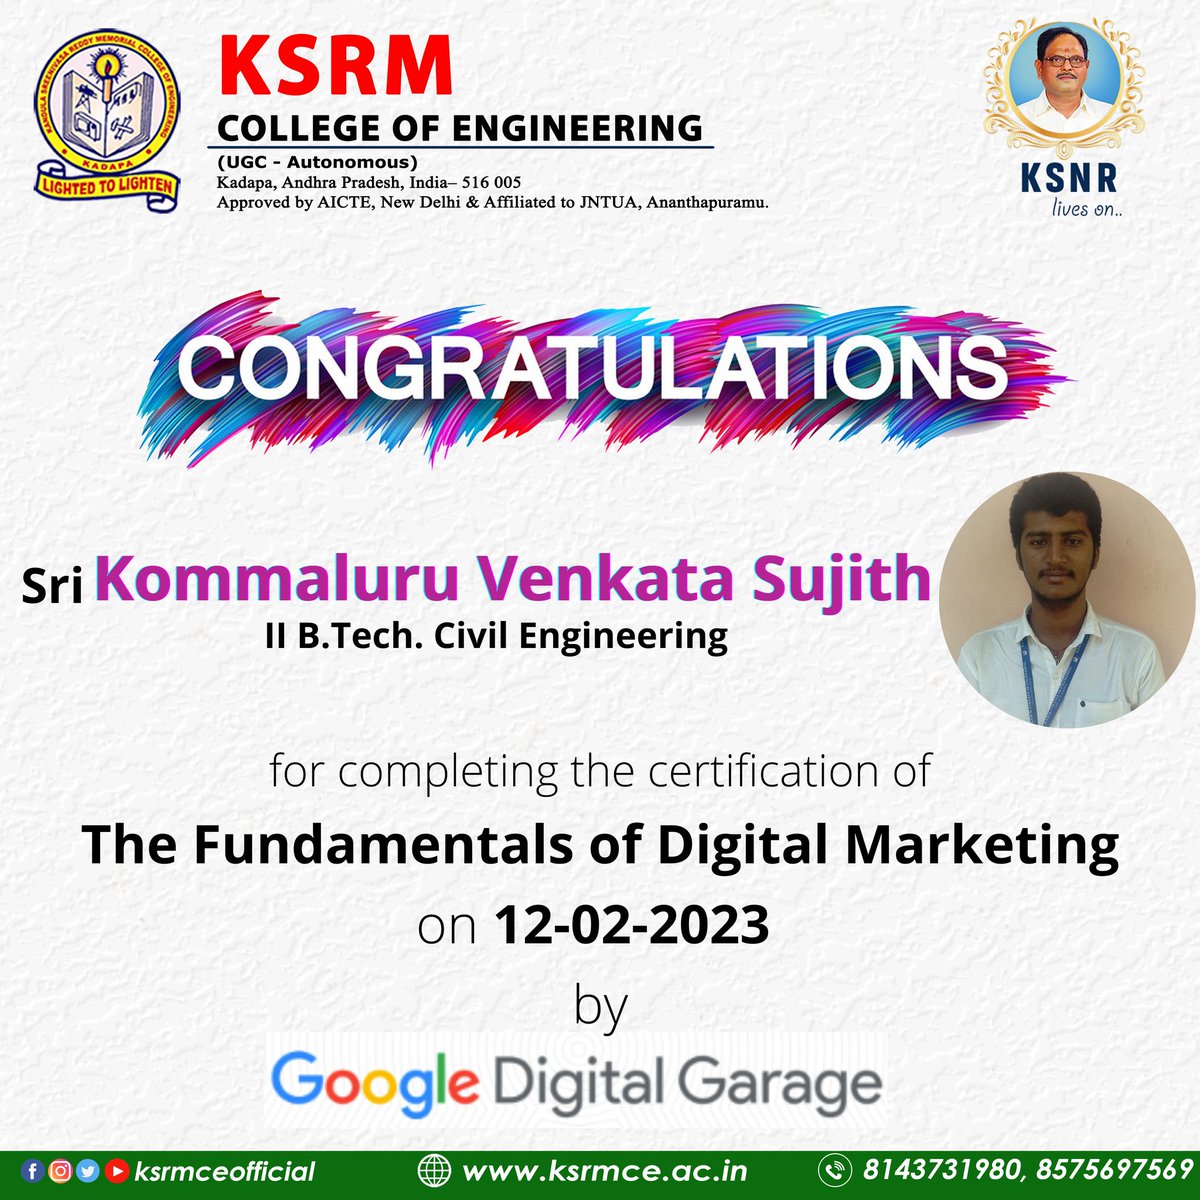 Congratulations 🎉

#ksrmciv #googledigitalgarage #ksrm #ksrmce #kandulagroups  #engineering #kadapa #aicte #jntua #IntiativesofMHRD #ugc #iic